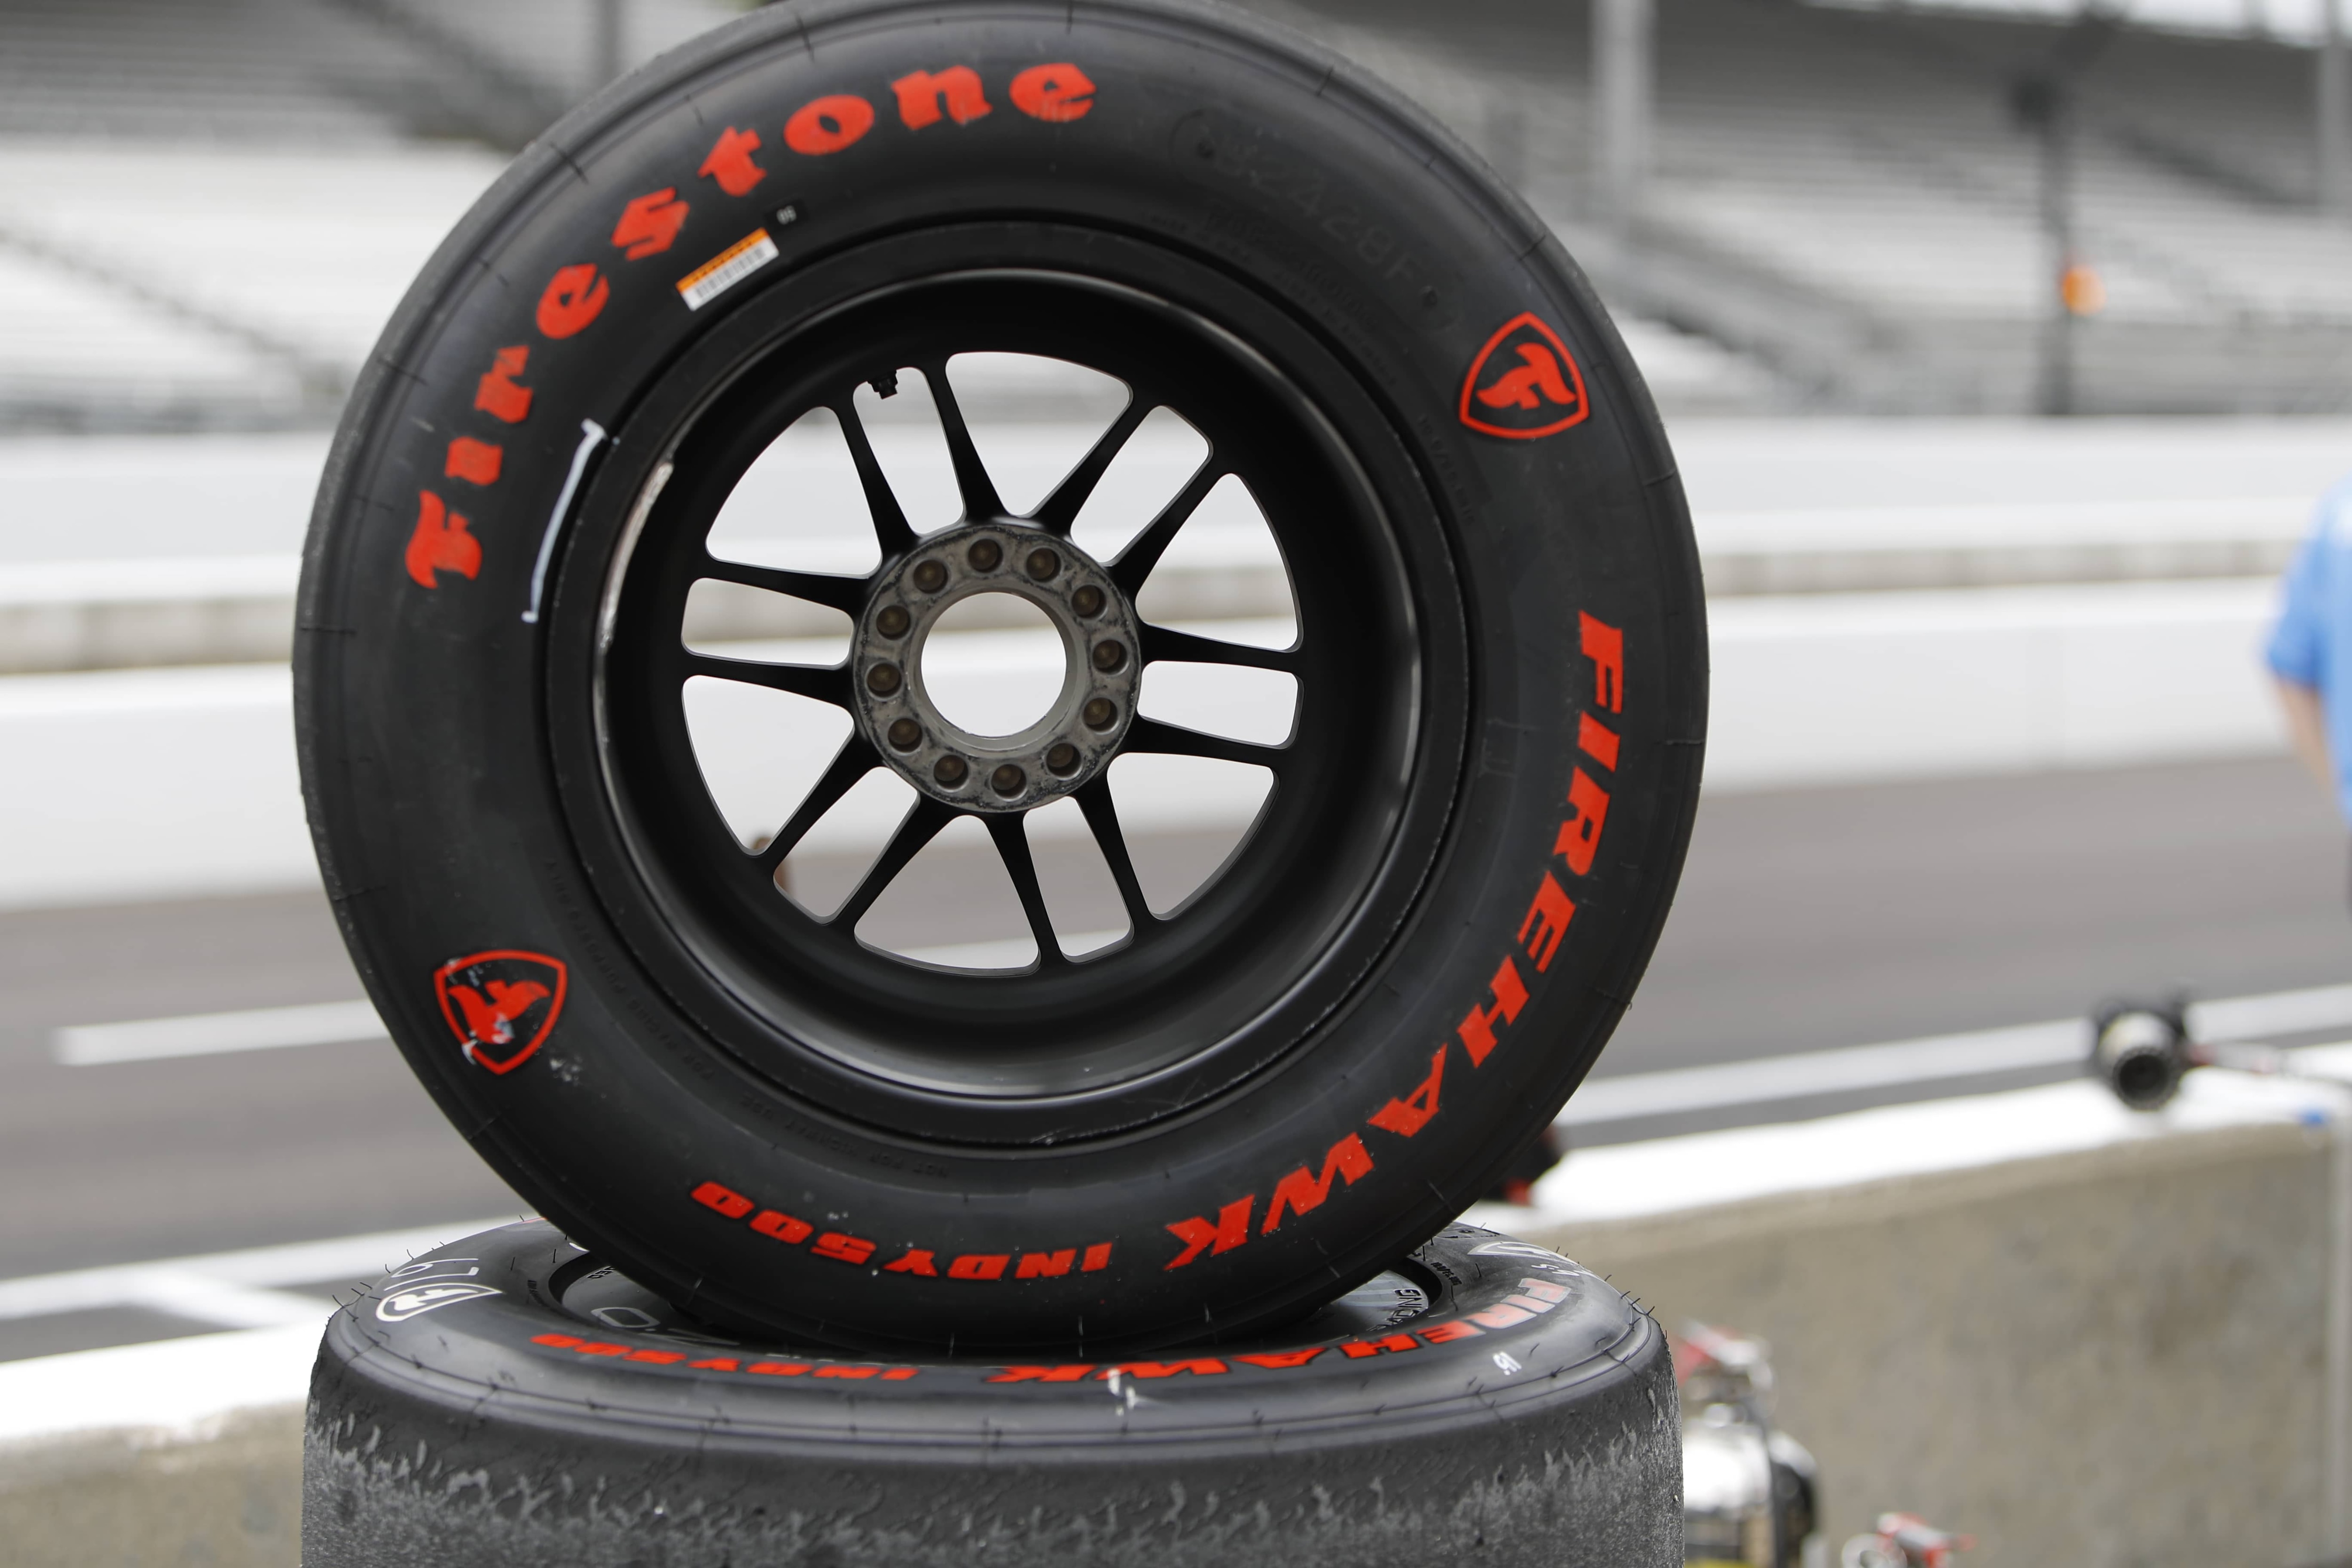 2022 Running of Indianapolis 500 Firehawk Tire